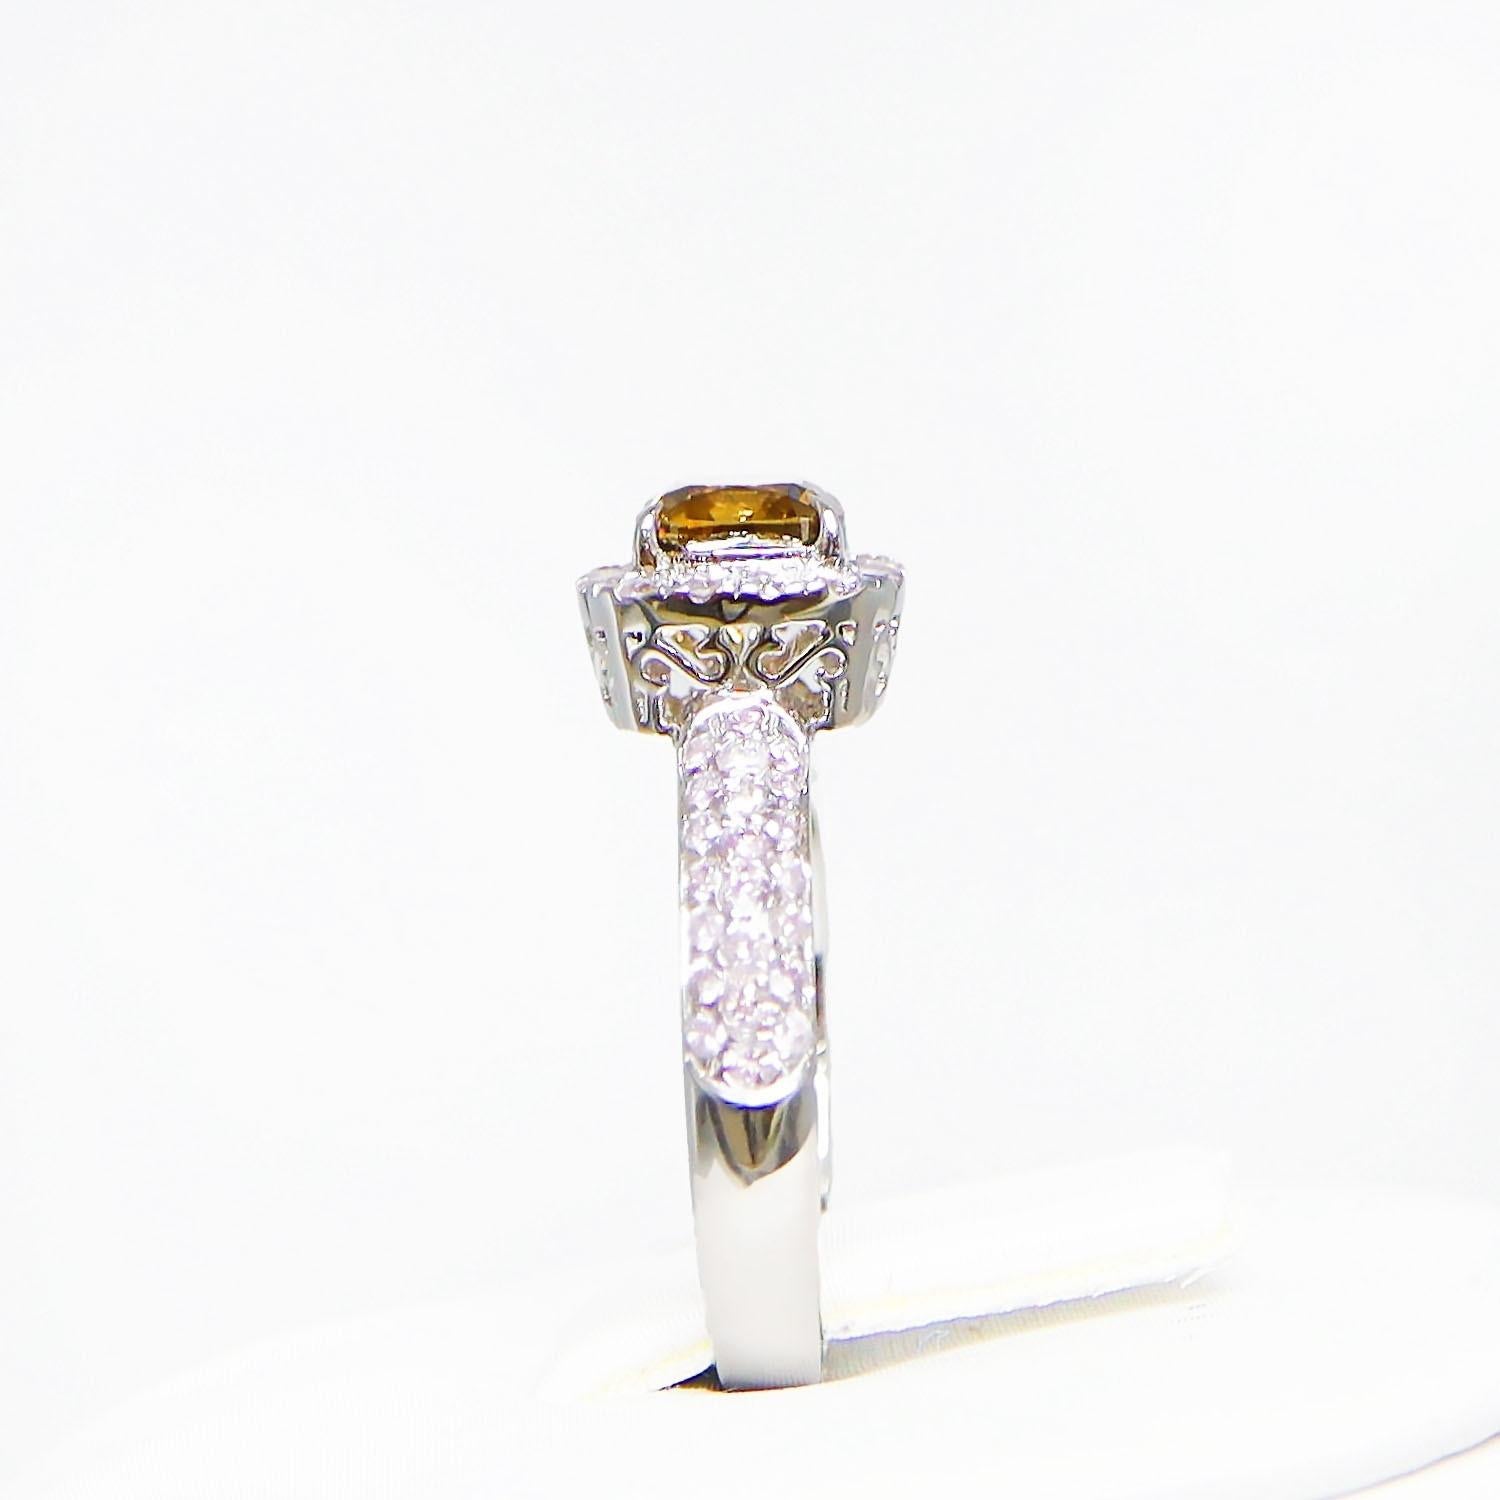 IGI 14K 0.76 Ct Yellow&Pink Diamonds Antique Art Deco Style Engagement Ring For Sale 1